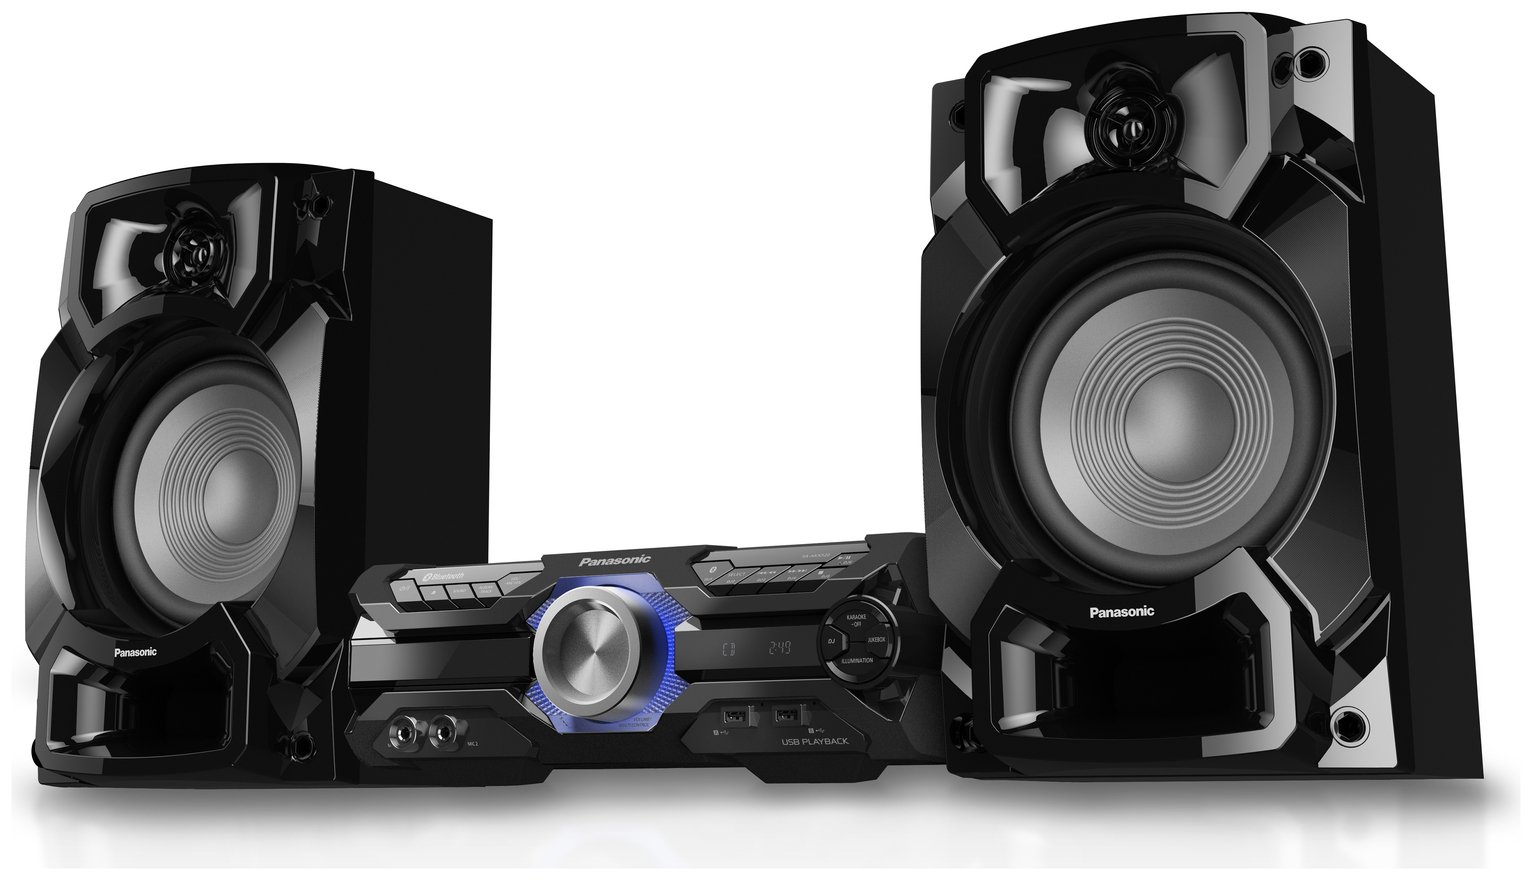 Panasonic SC-AKX520 Audio System Review